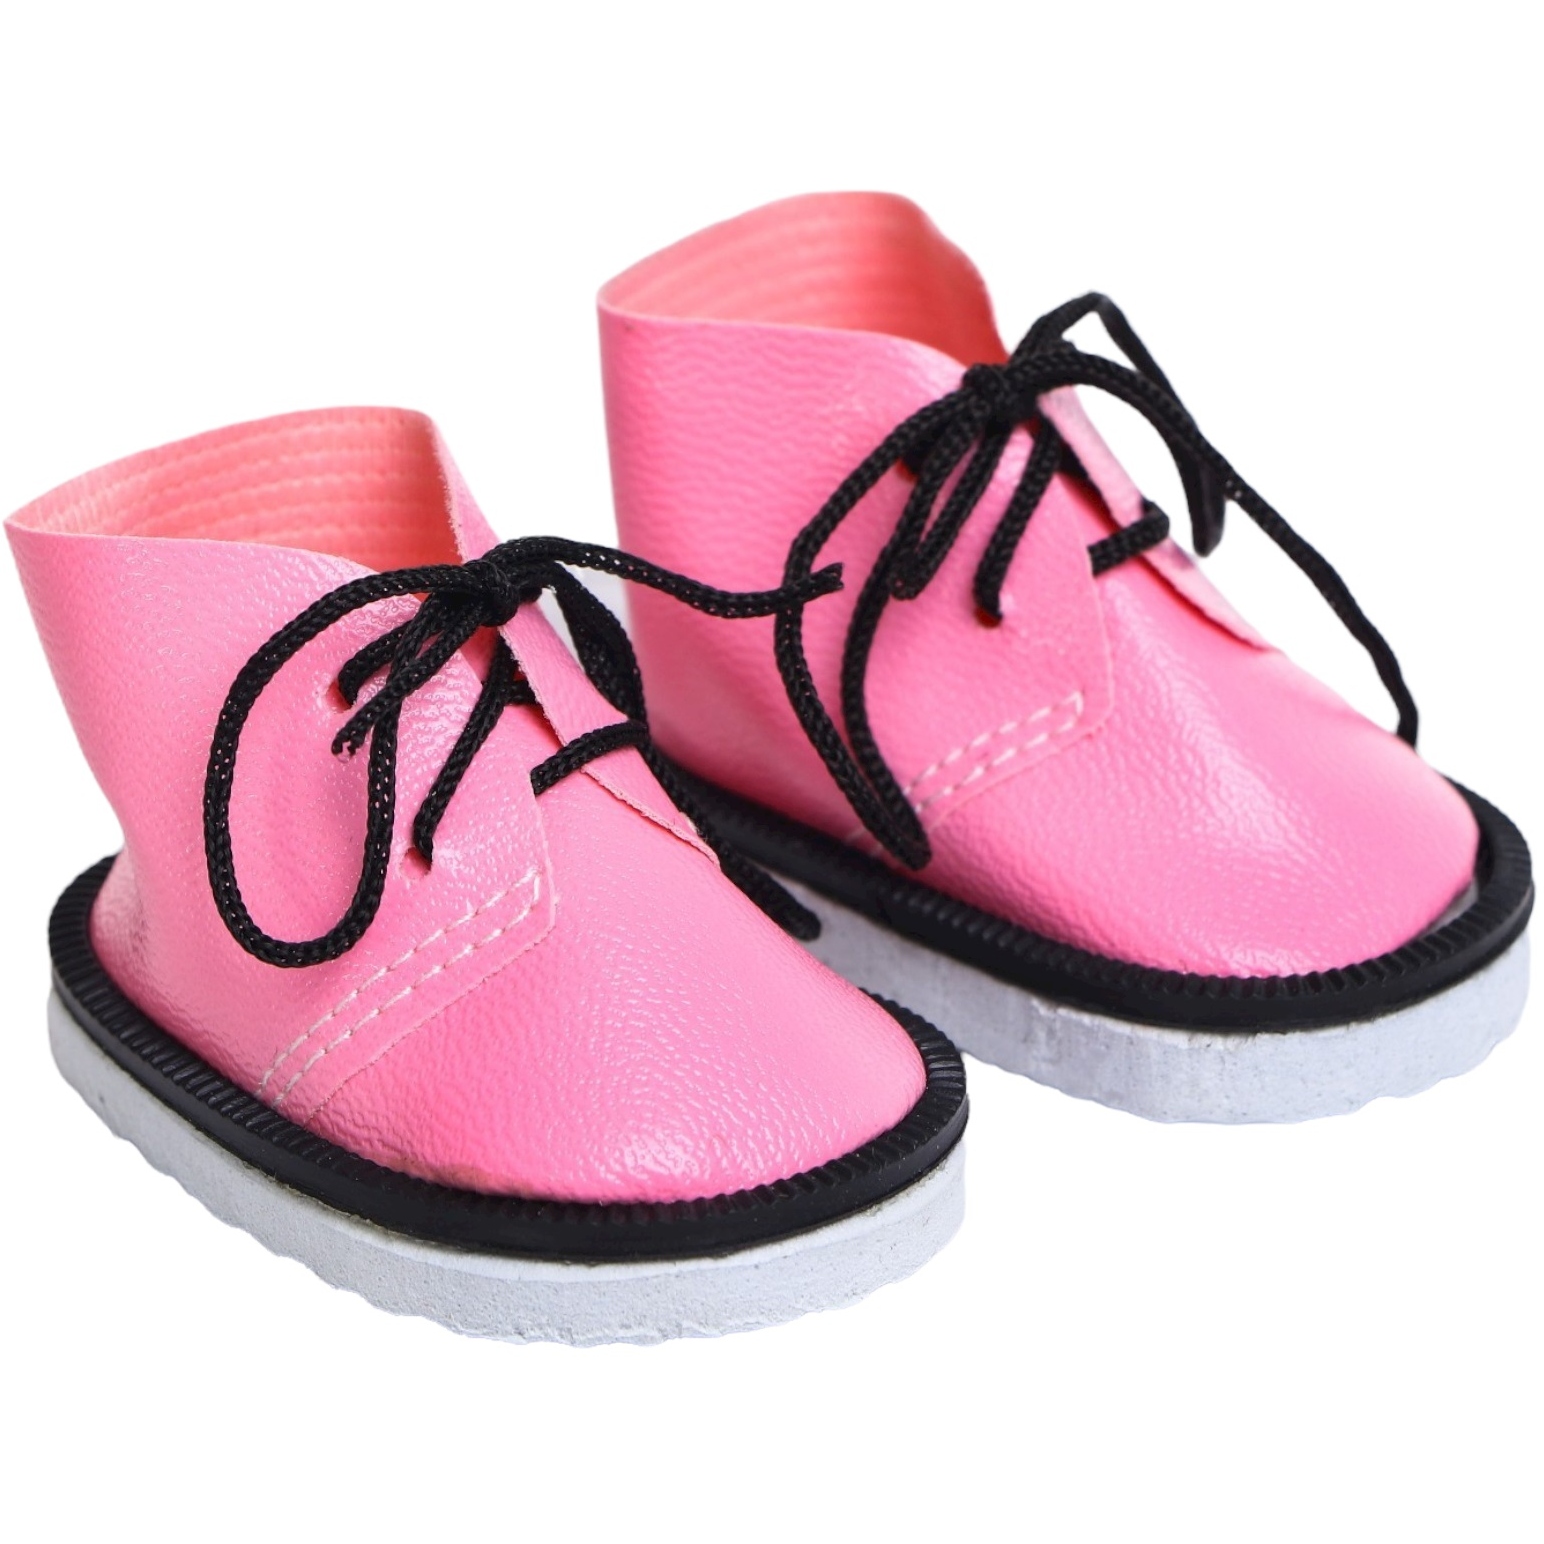 Ботинки для куклы "Завязки" (6 см, нежно-розовый) 3495211